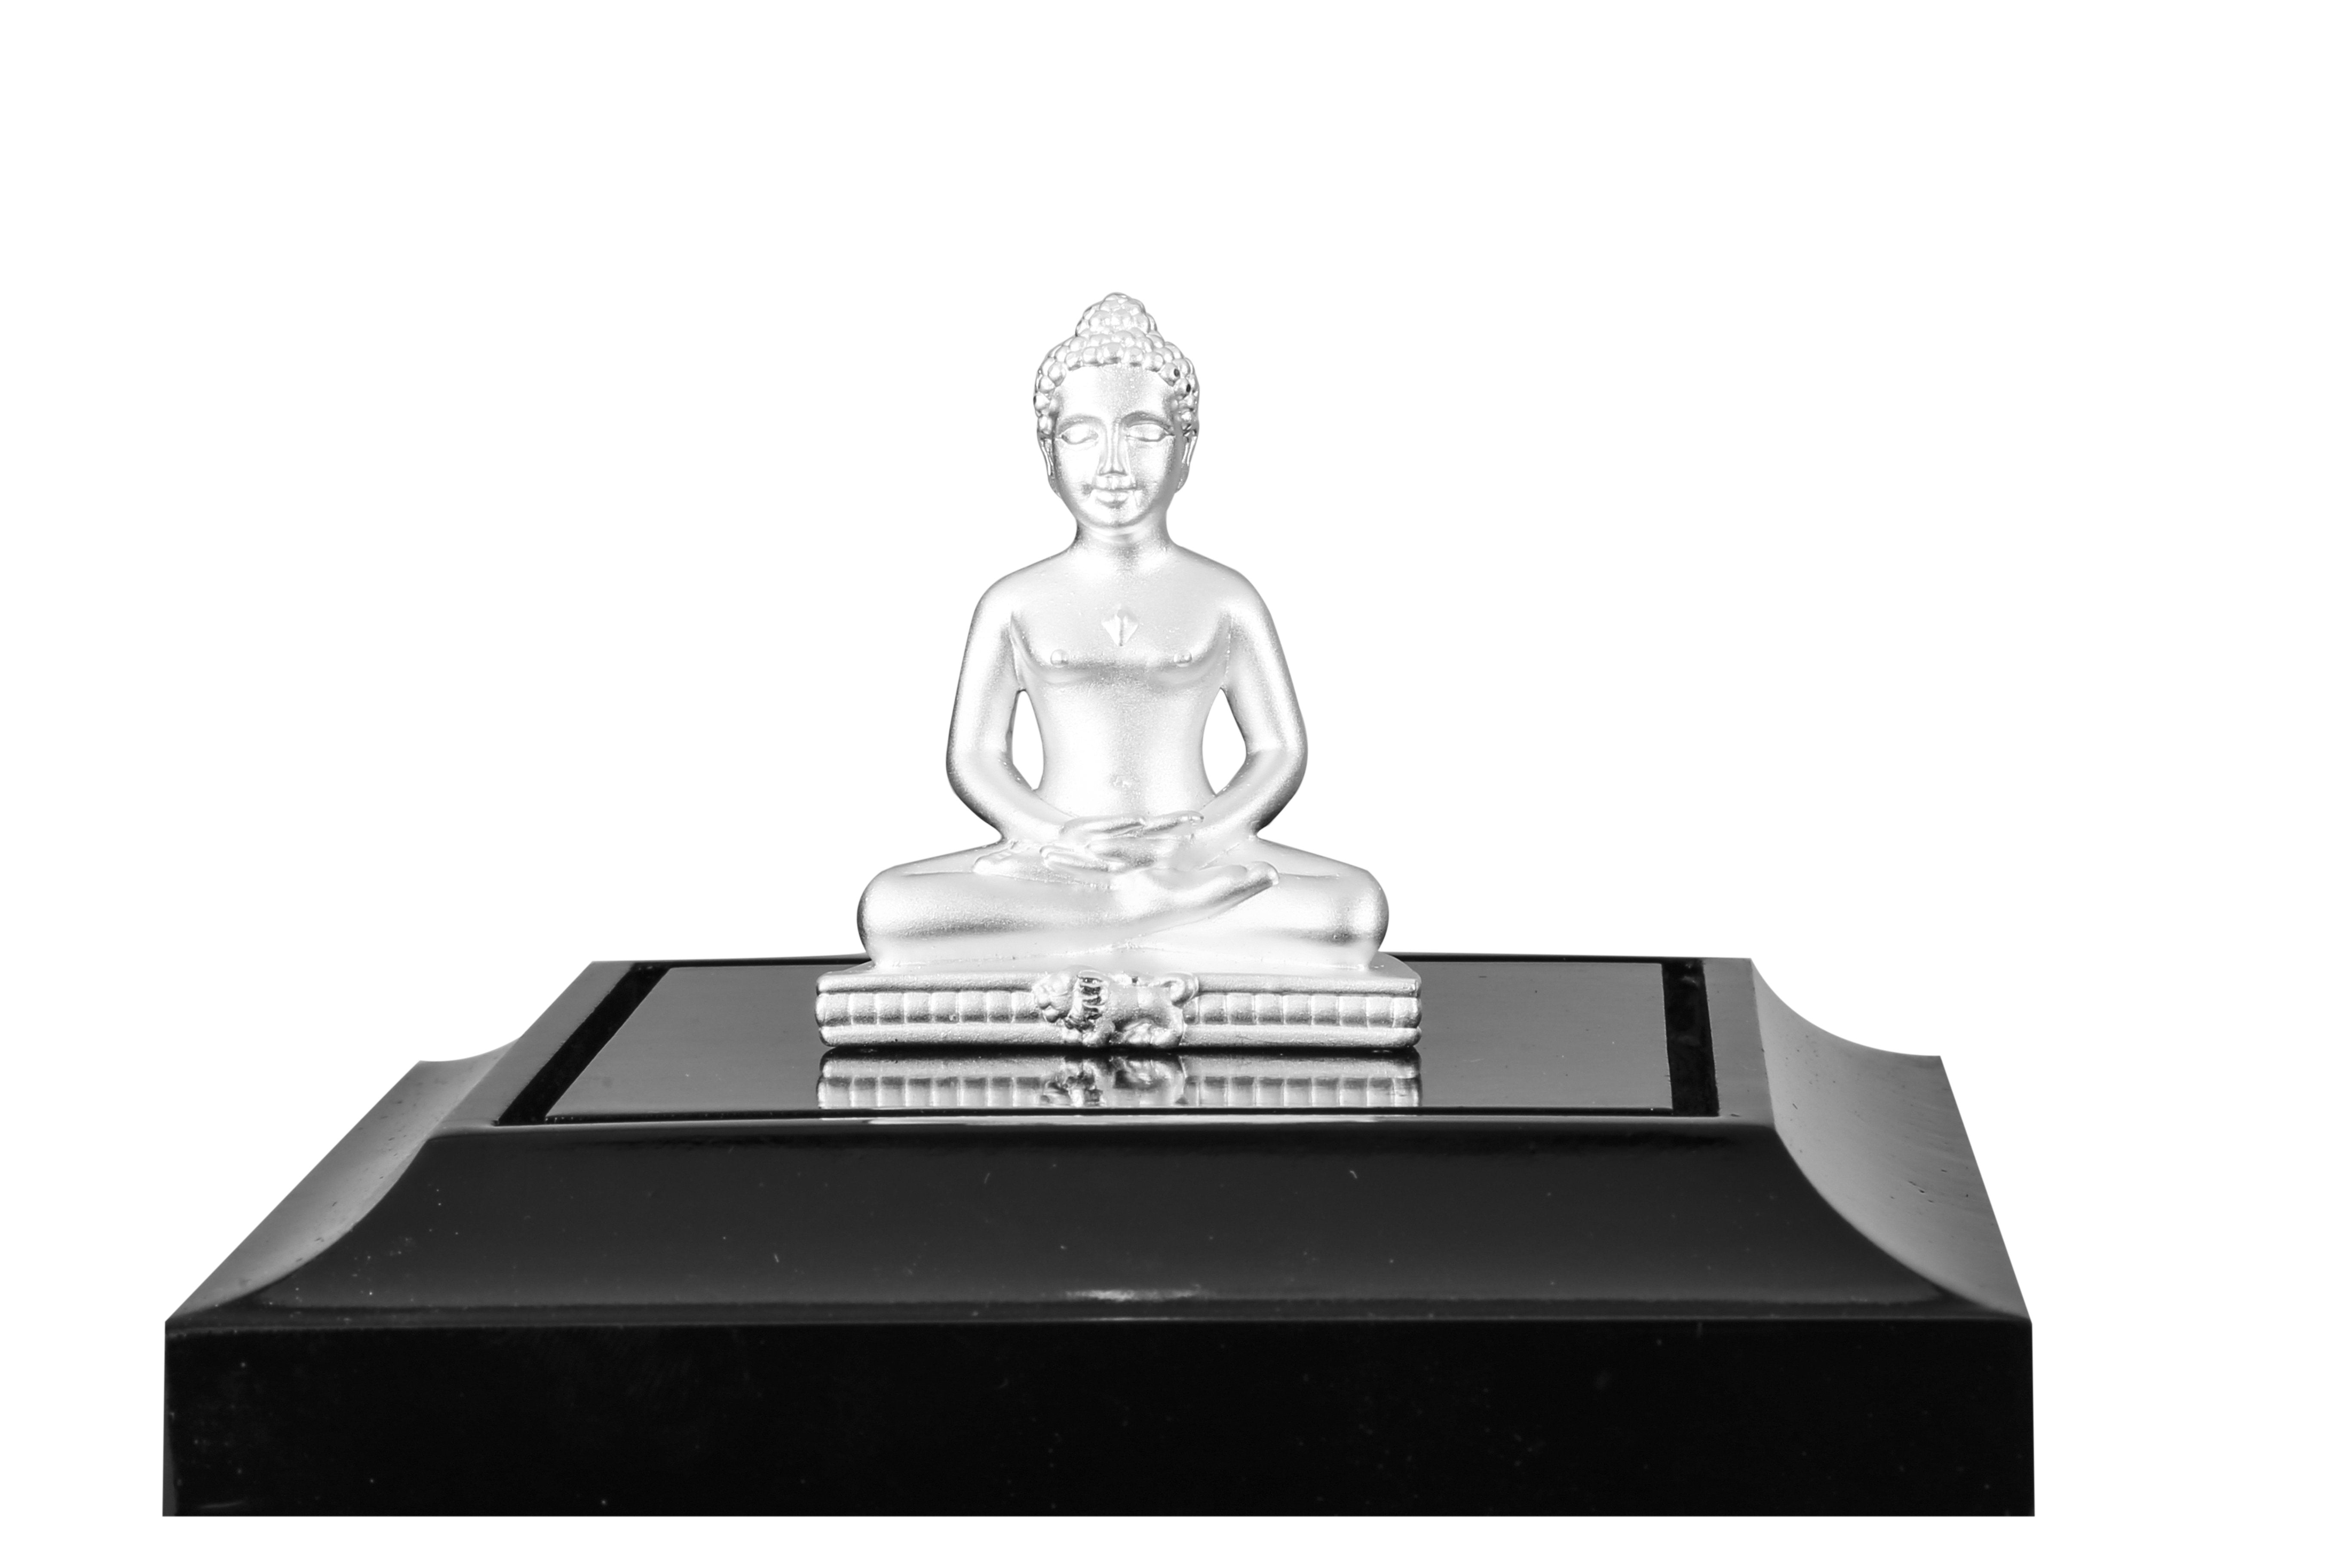 999 Pure Silver Lord Buddha Idol By Krysaliis Isvara Idols